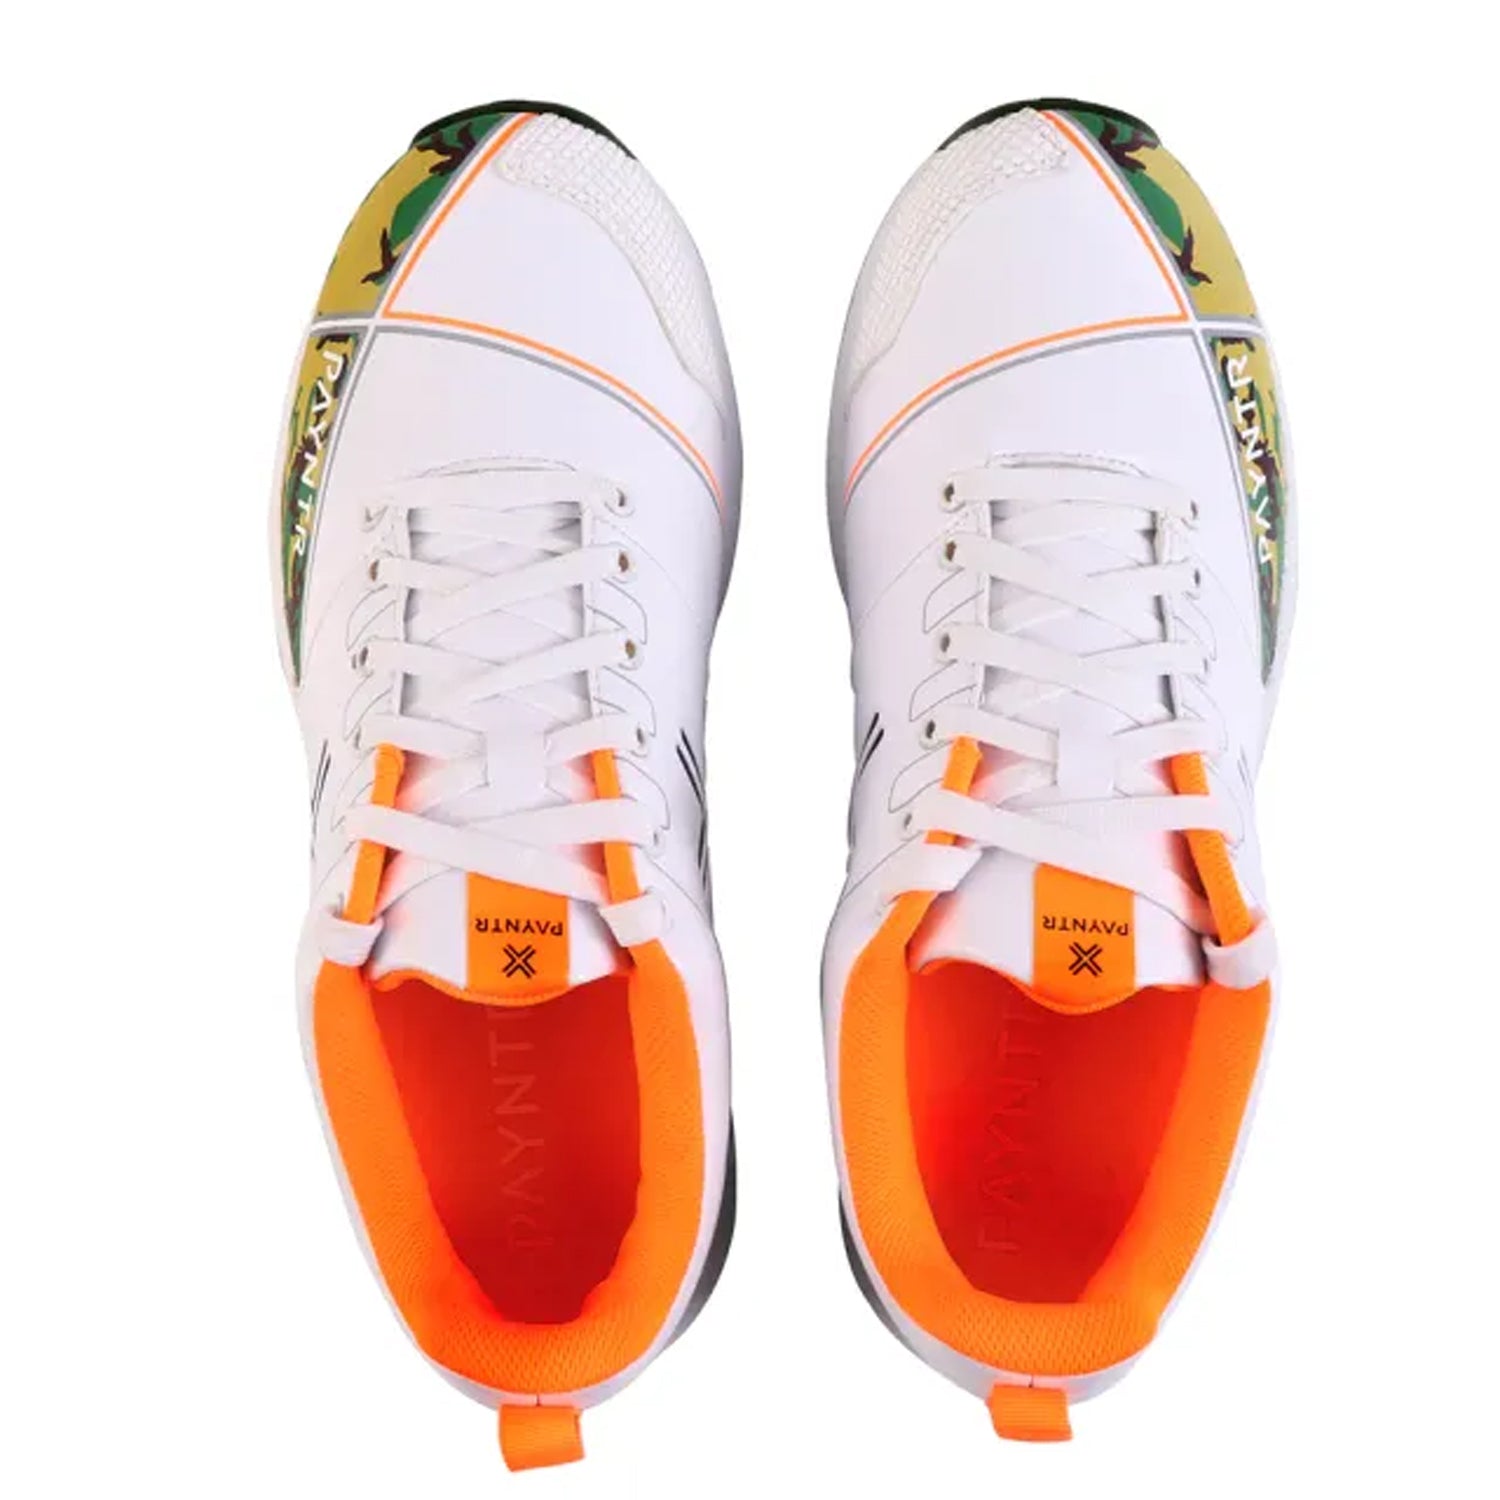 Payntr X Batting Pimple Rubber Spikes Cricket Shoes - Camo - Best Price online Prokicksports.com